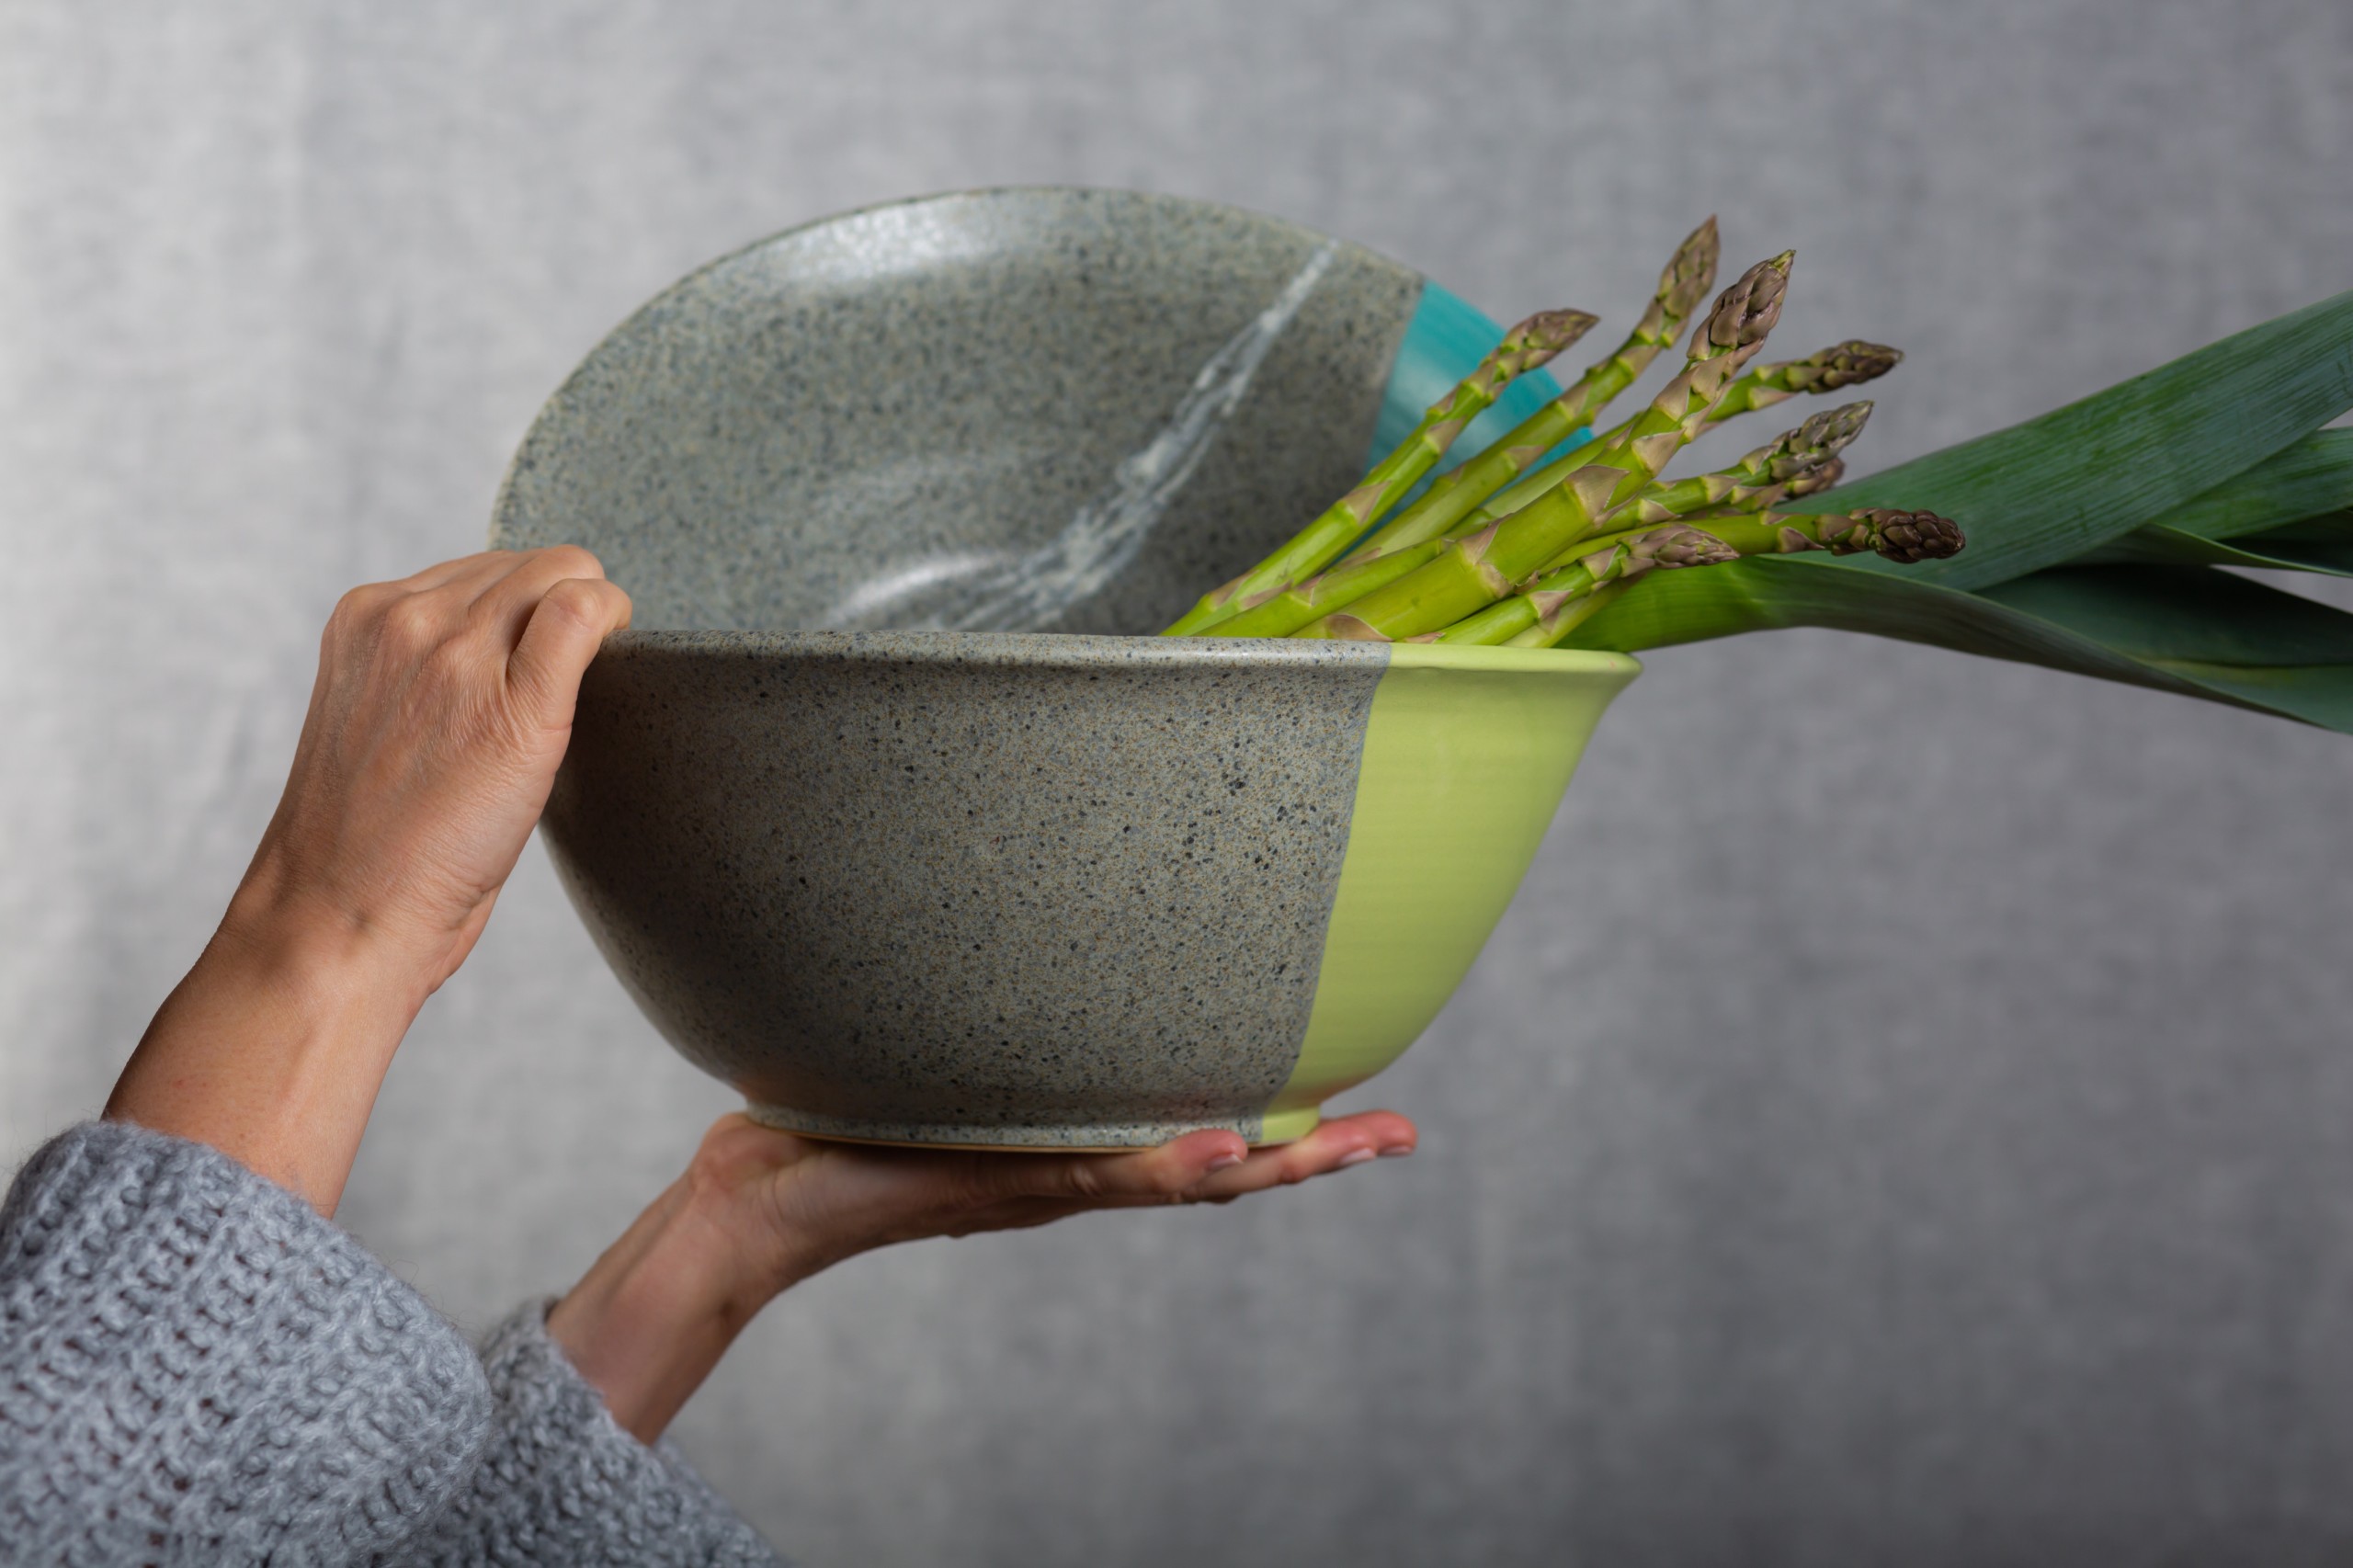 Salatschüssel Keramik | große Salatschüssel maigrün